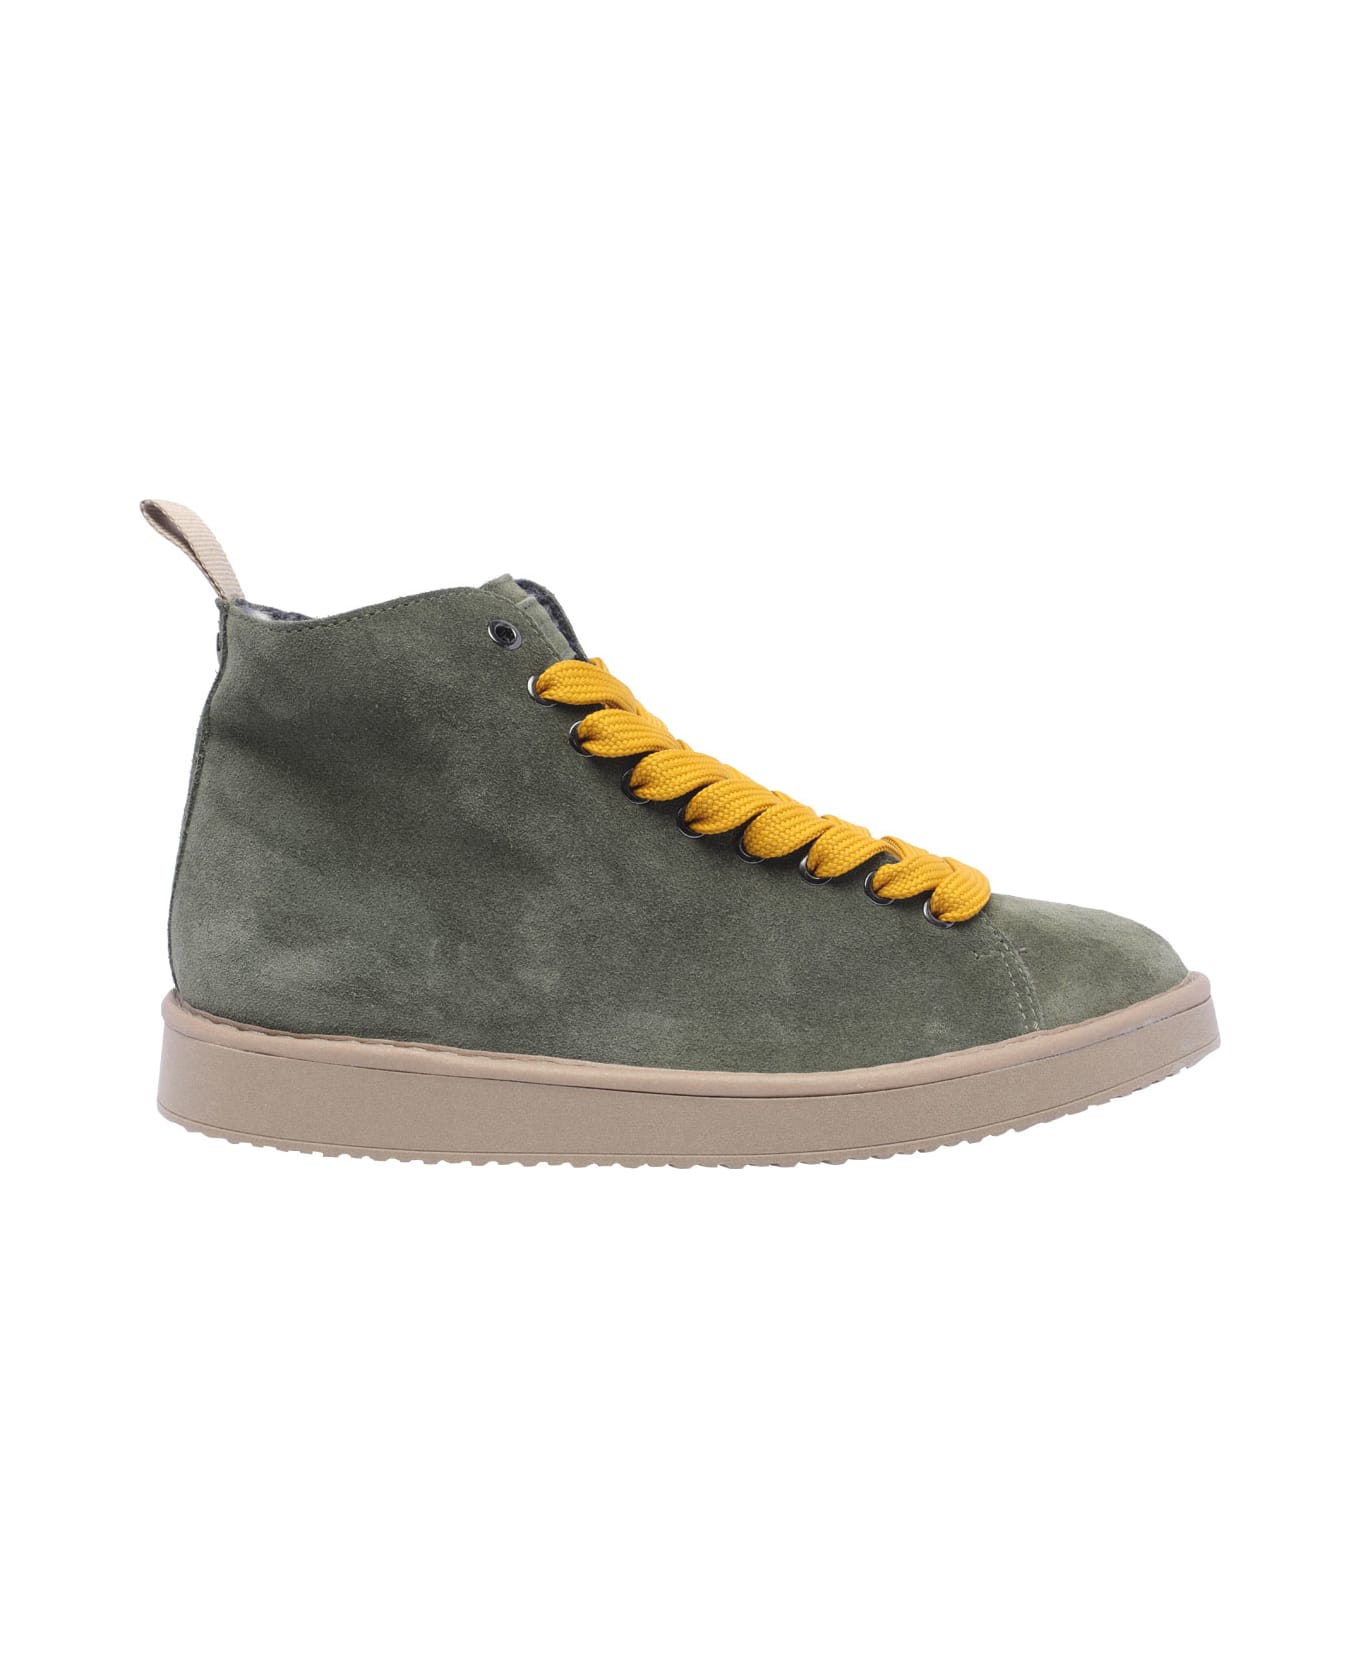 Panchic P01 Sneakers - Military Green Yellow